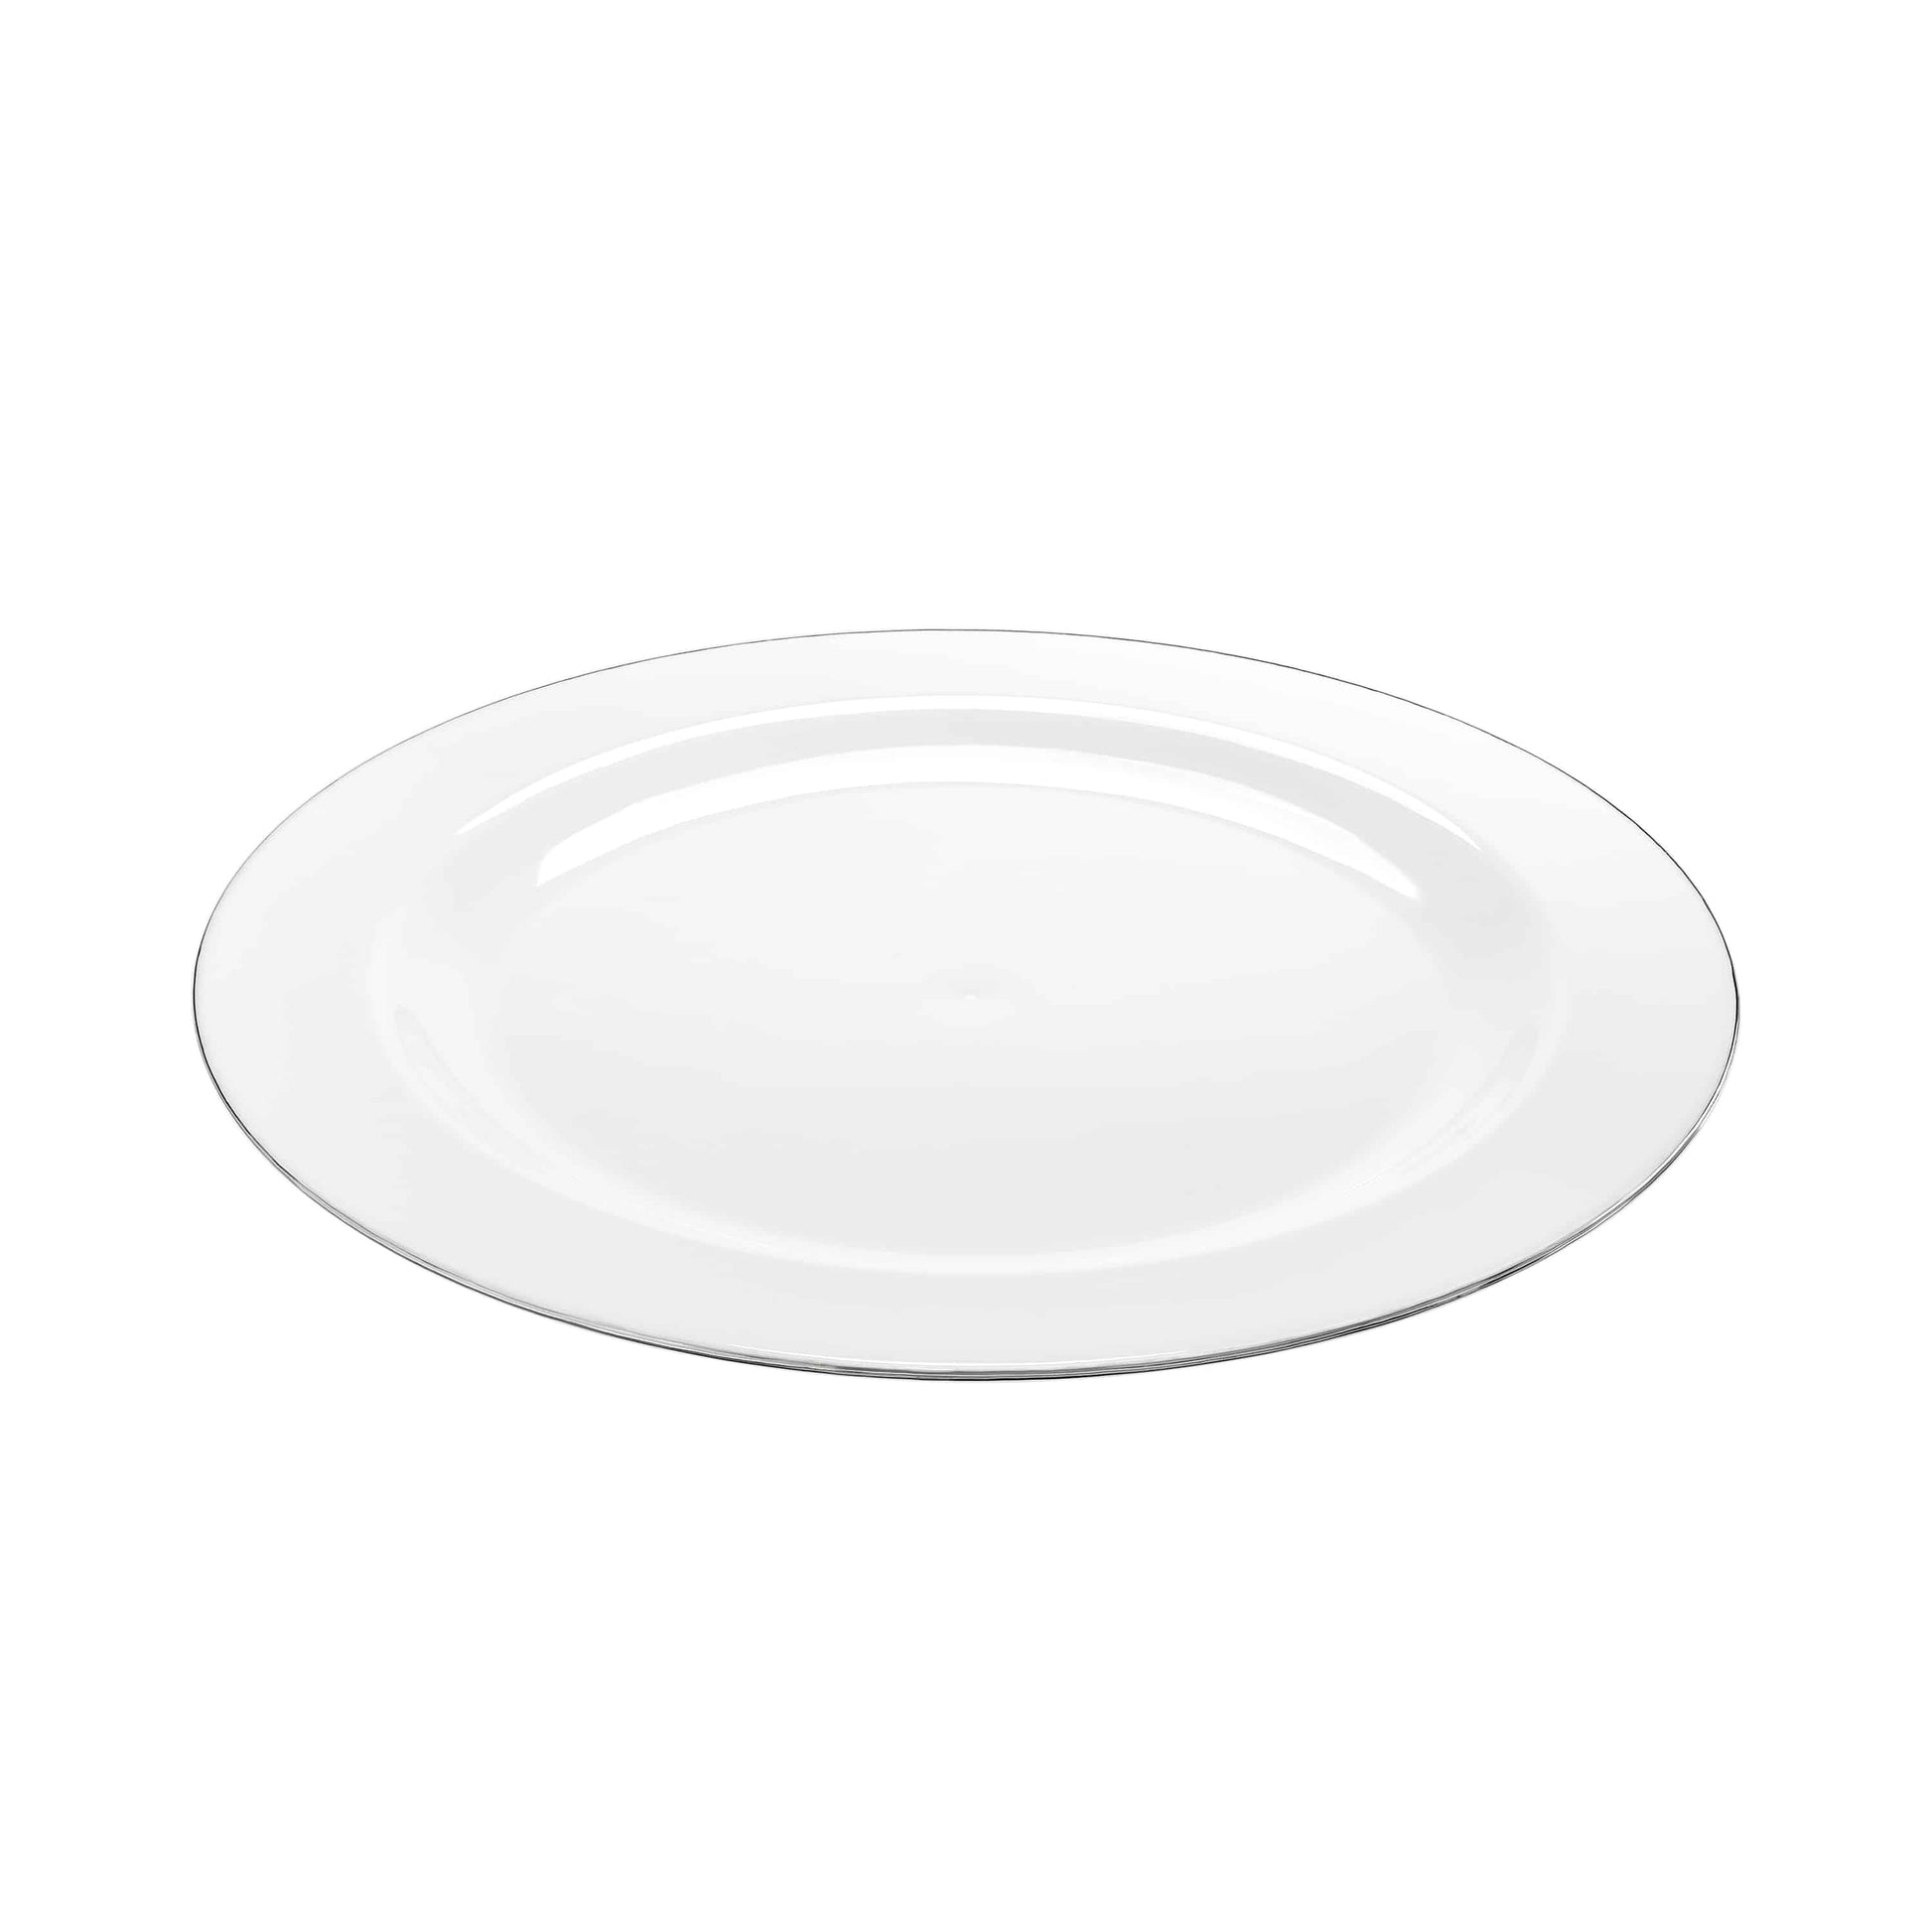 Magnificence Silver Edge Premium Plastic Round Dinnerware - King Zak